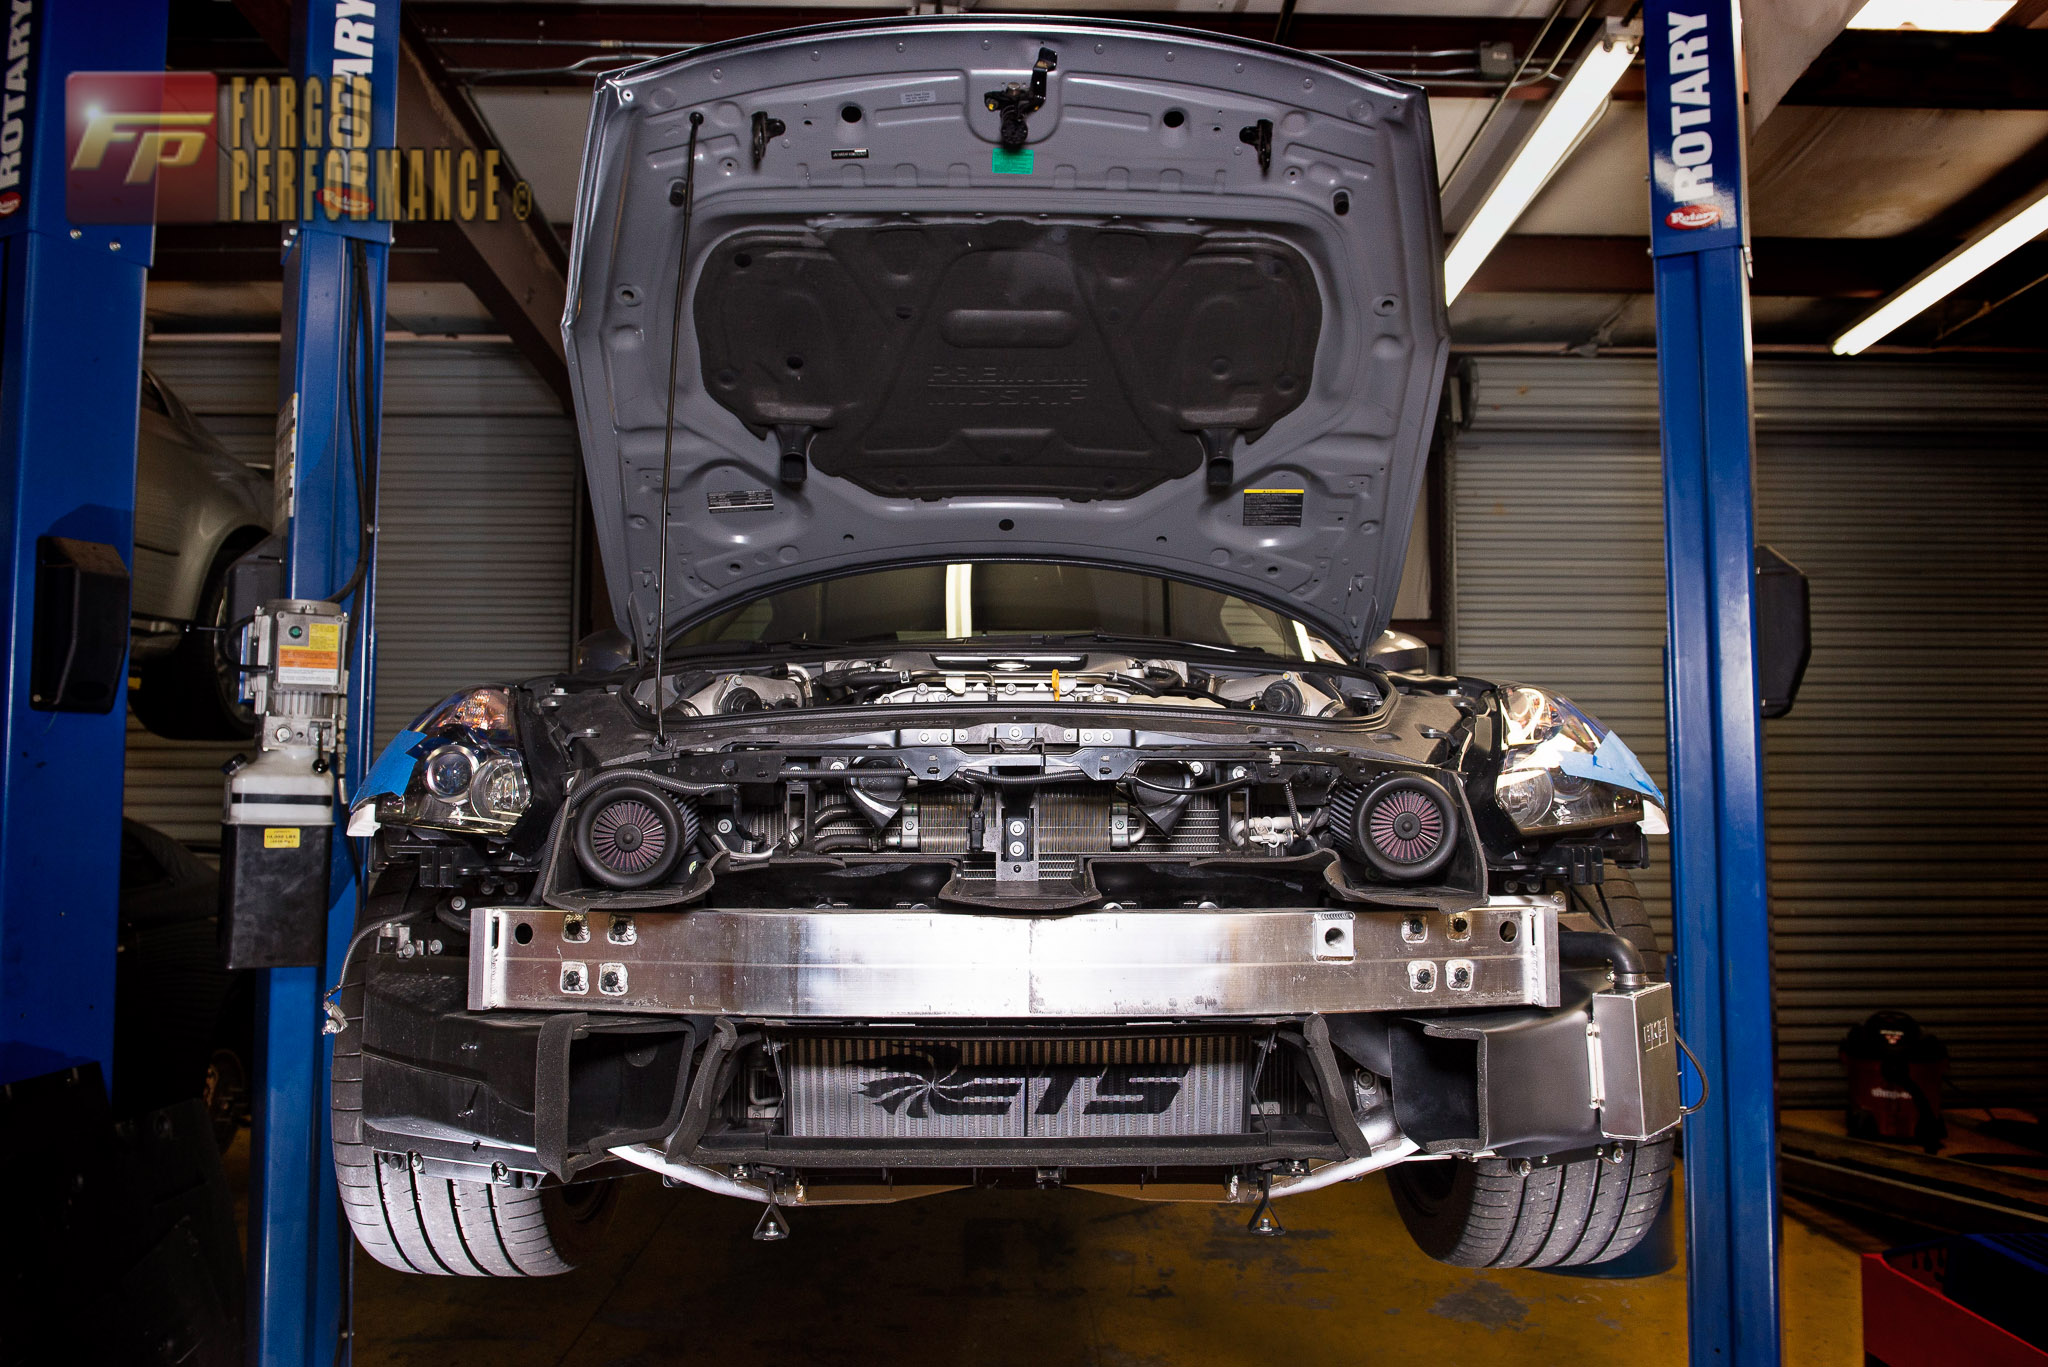 ETS Nissan GTR Street Intercooler Upgrade 2008-2015